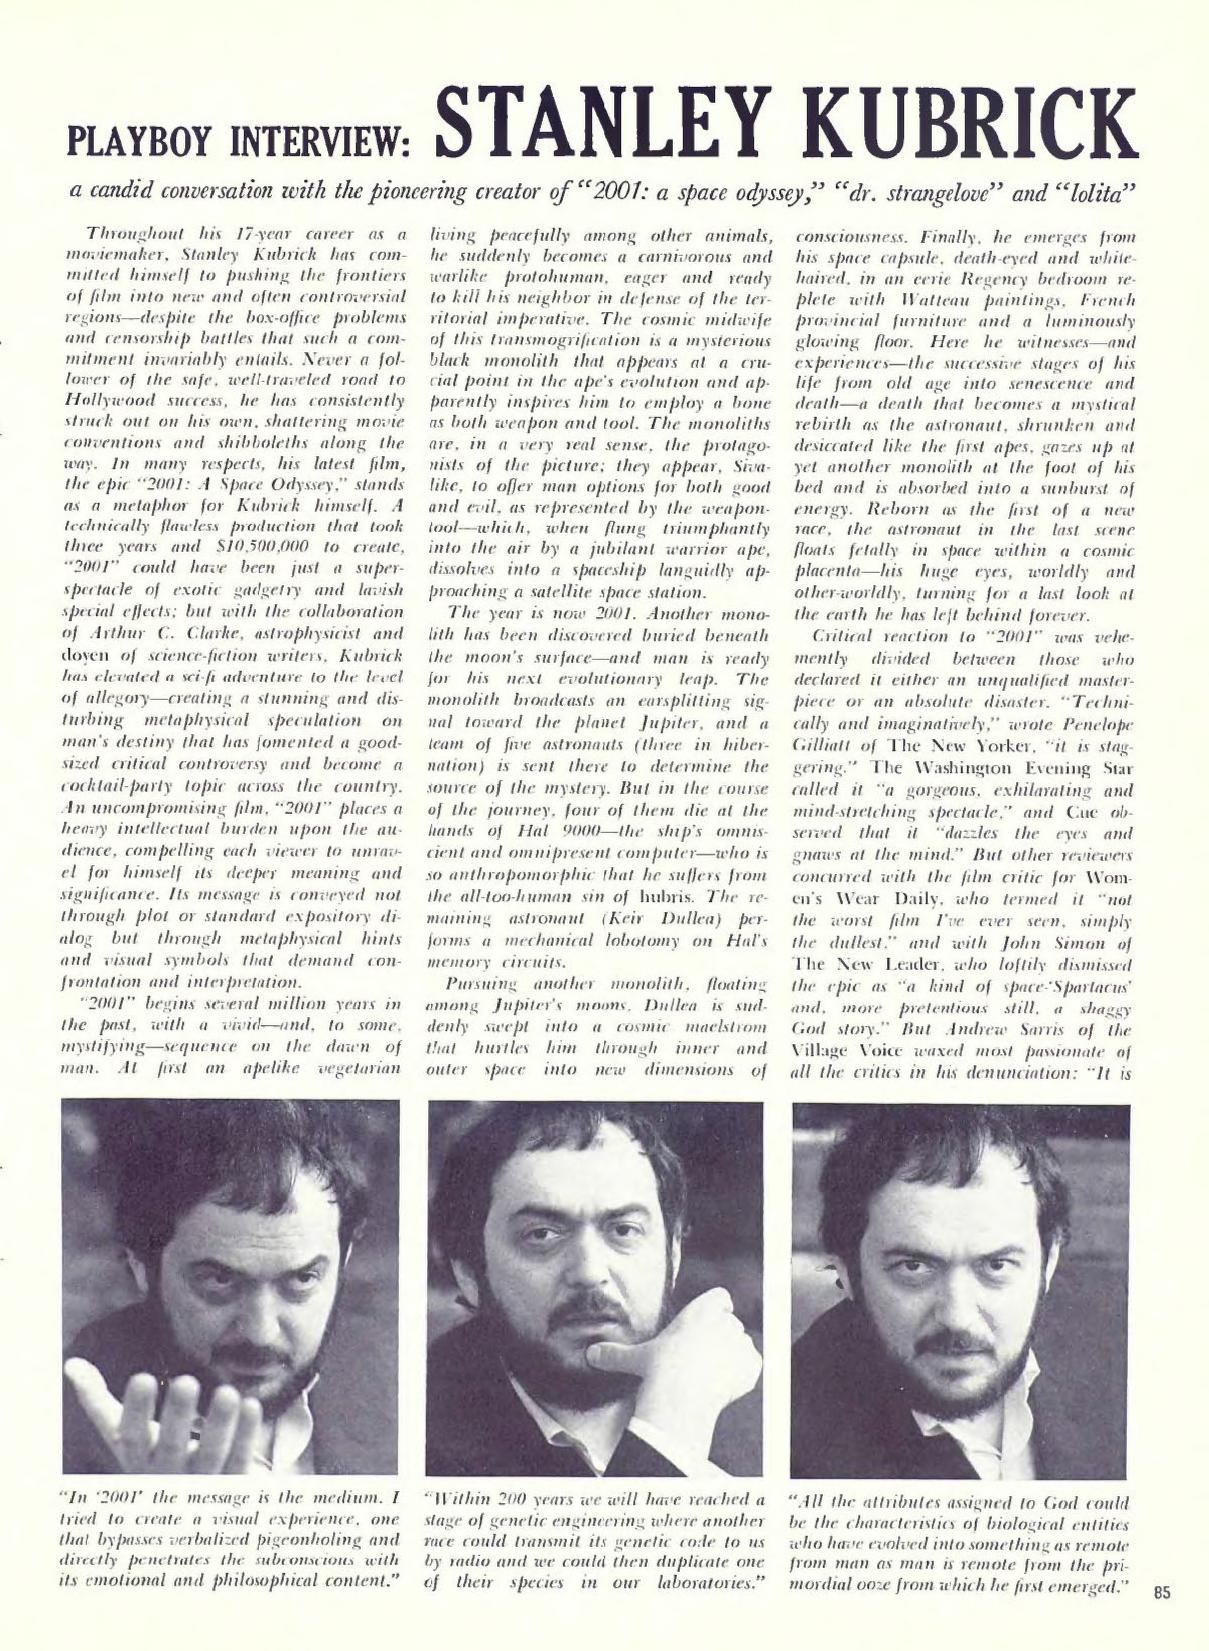 Playboy interview - Stanley Kubrick